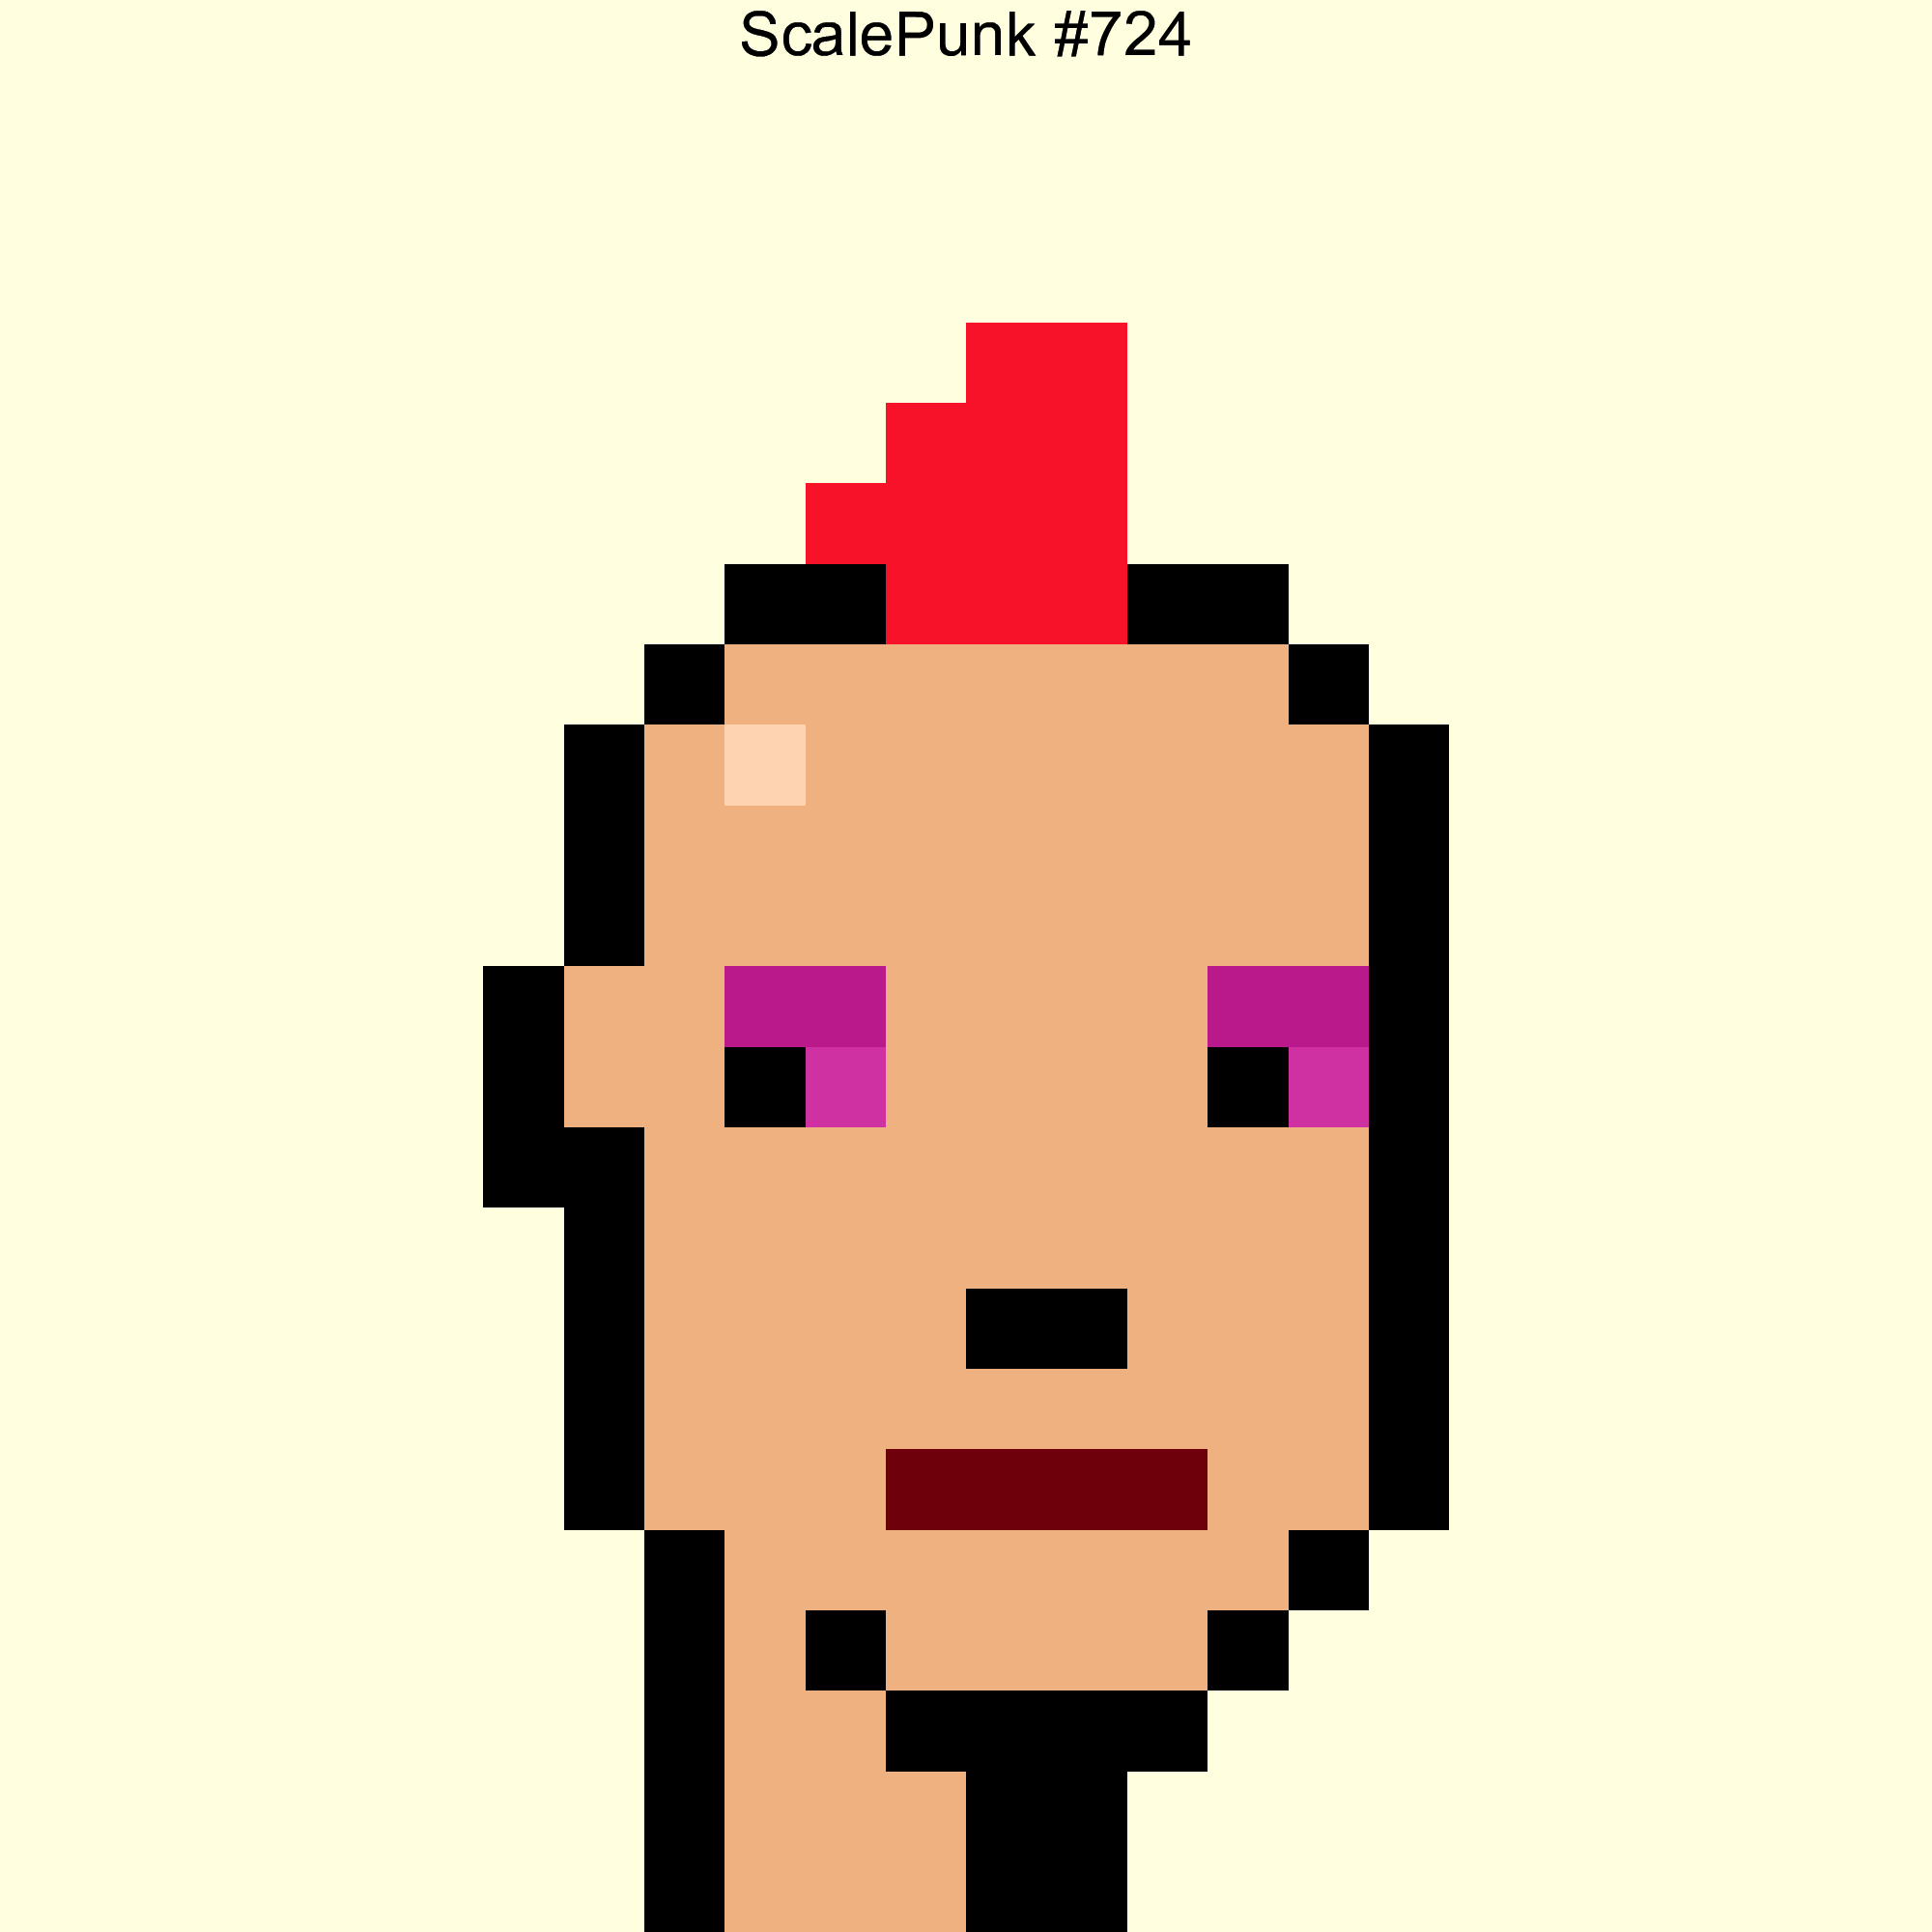 Punk 724